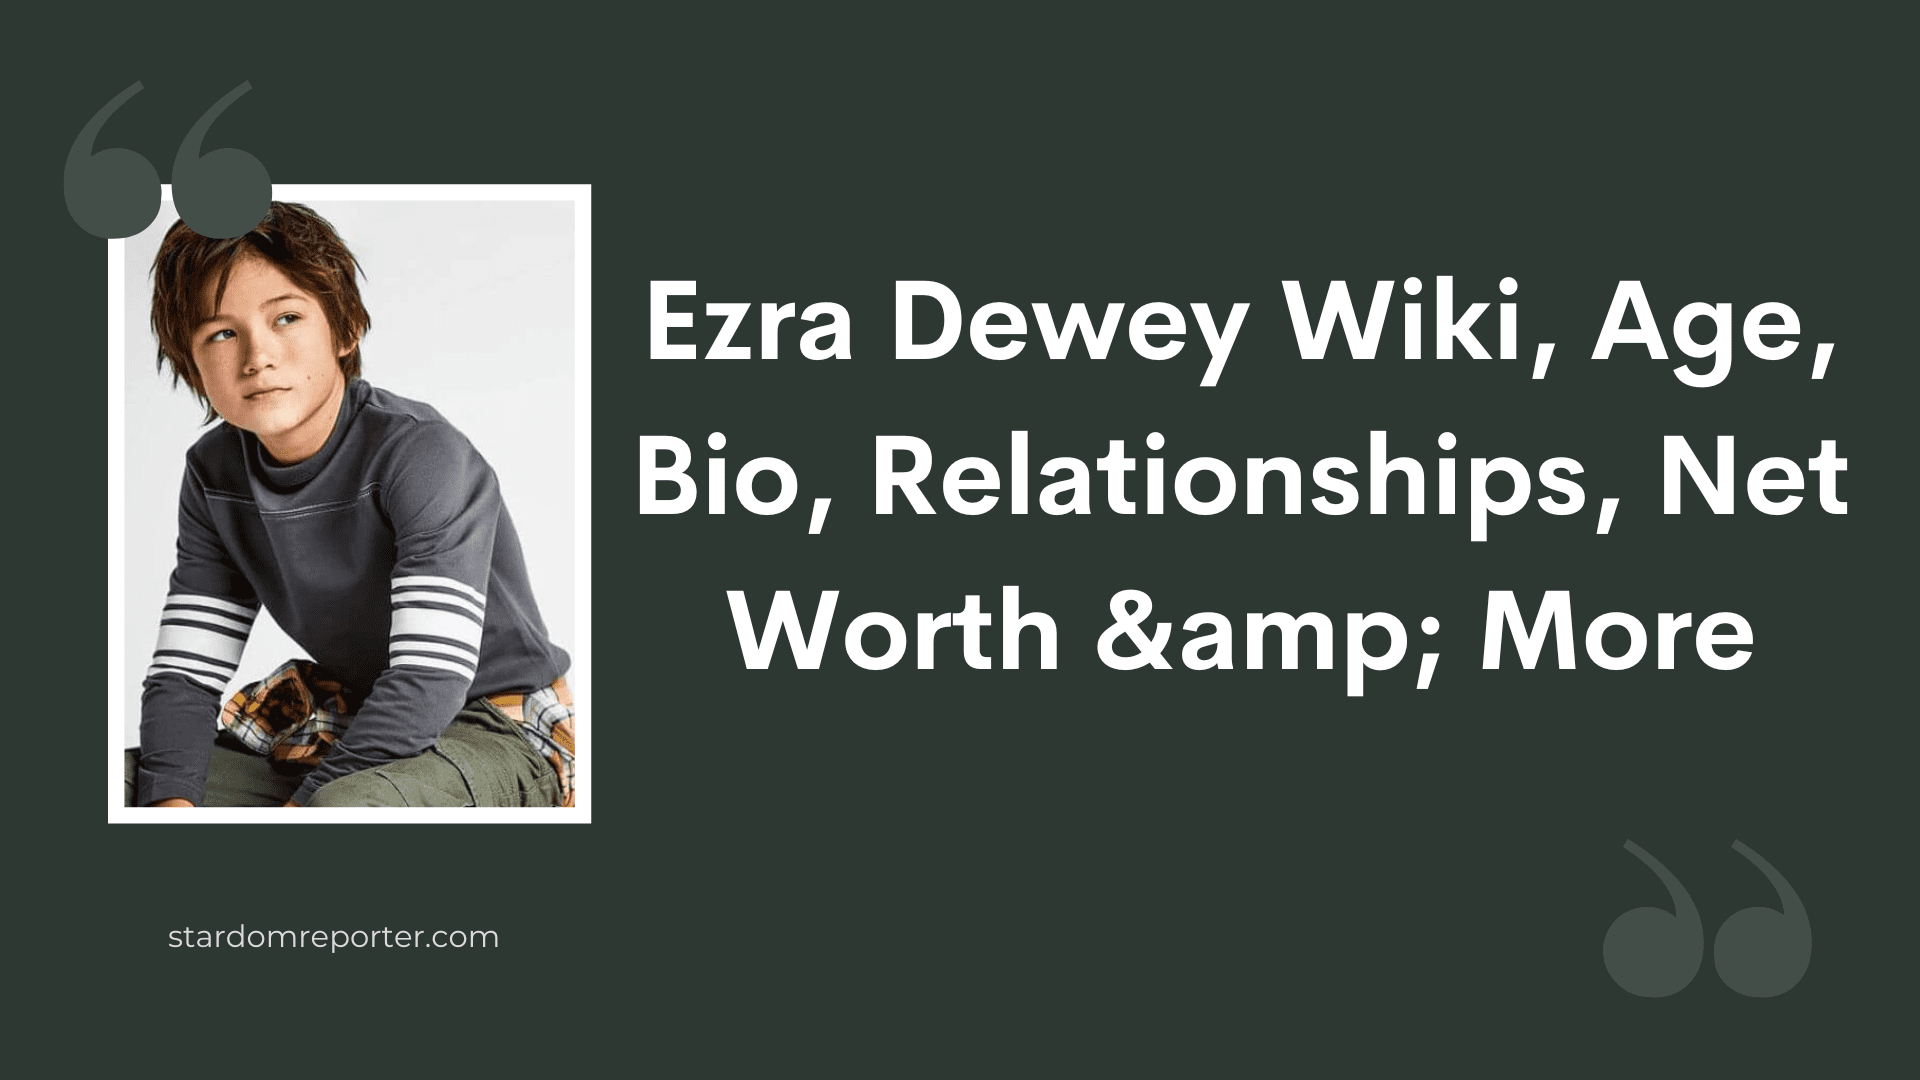 Ezra Dewey Wiki, Age, Bio, Relationships, Net Worth & More - 37